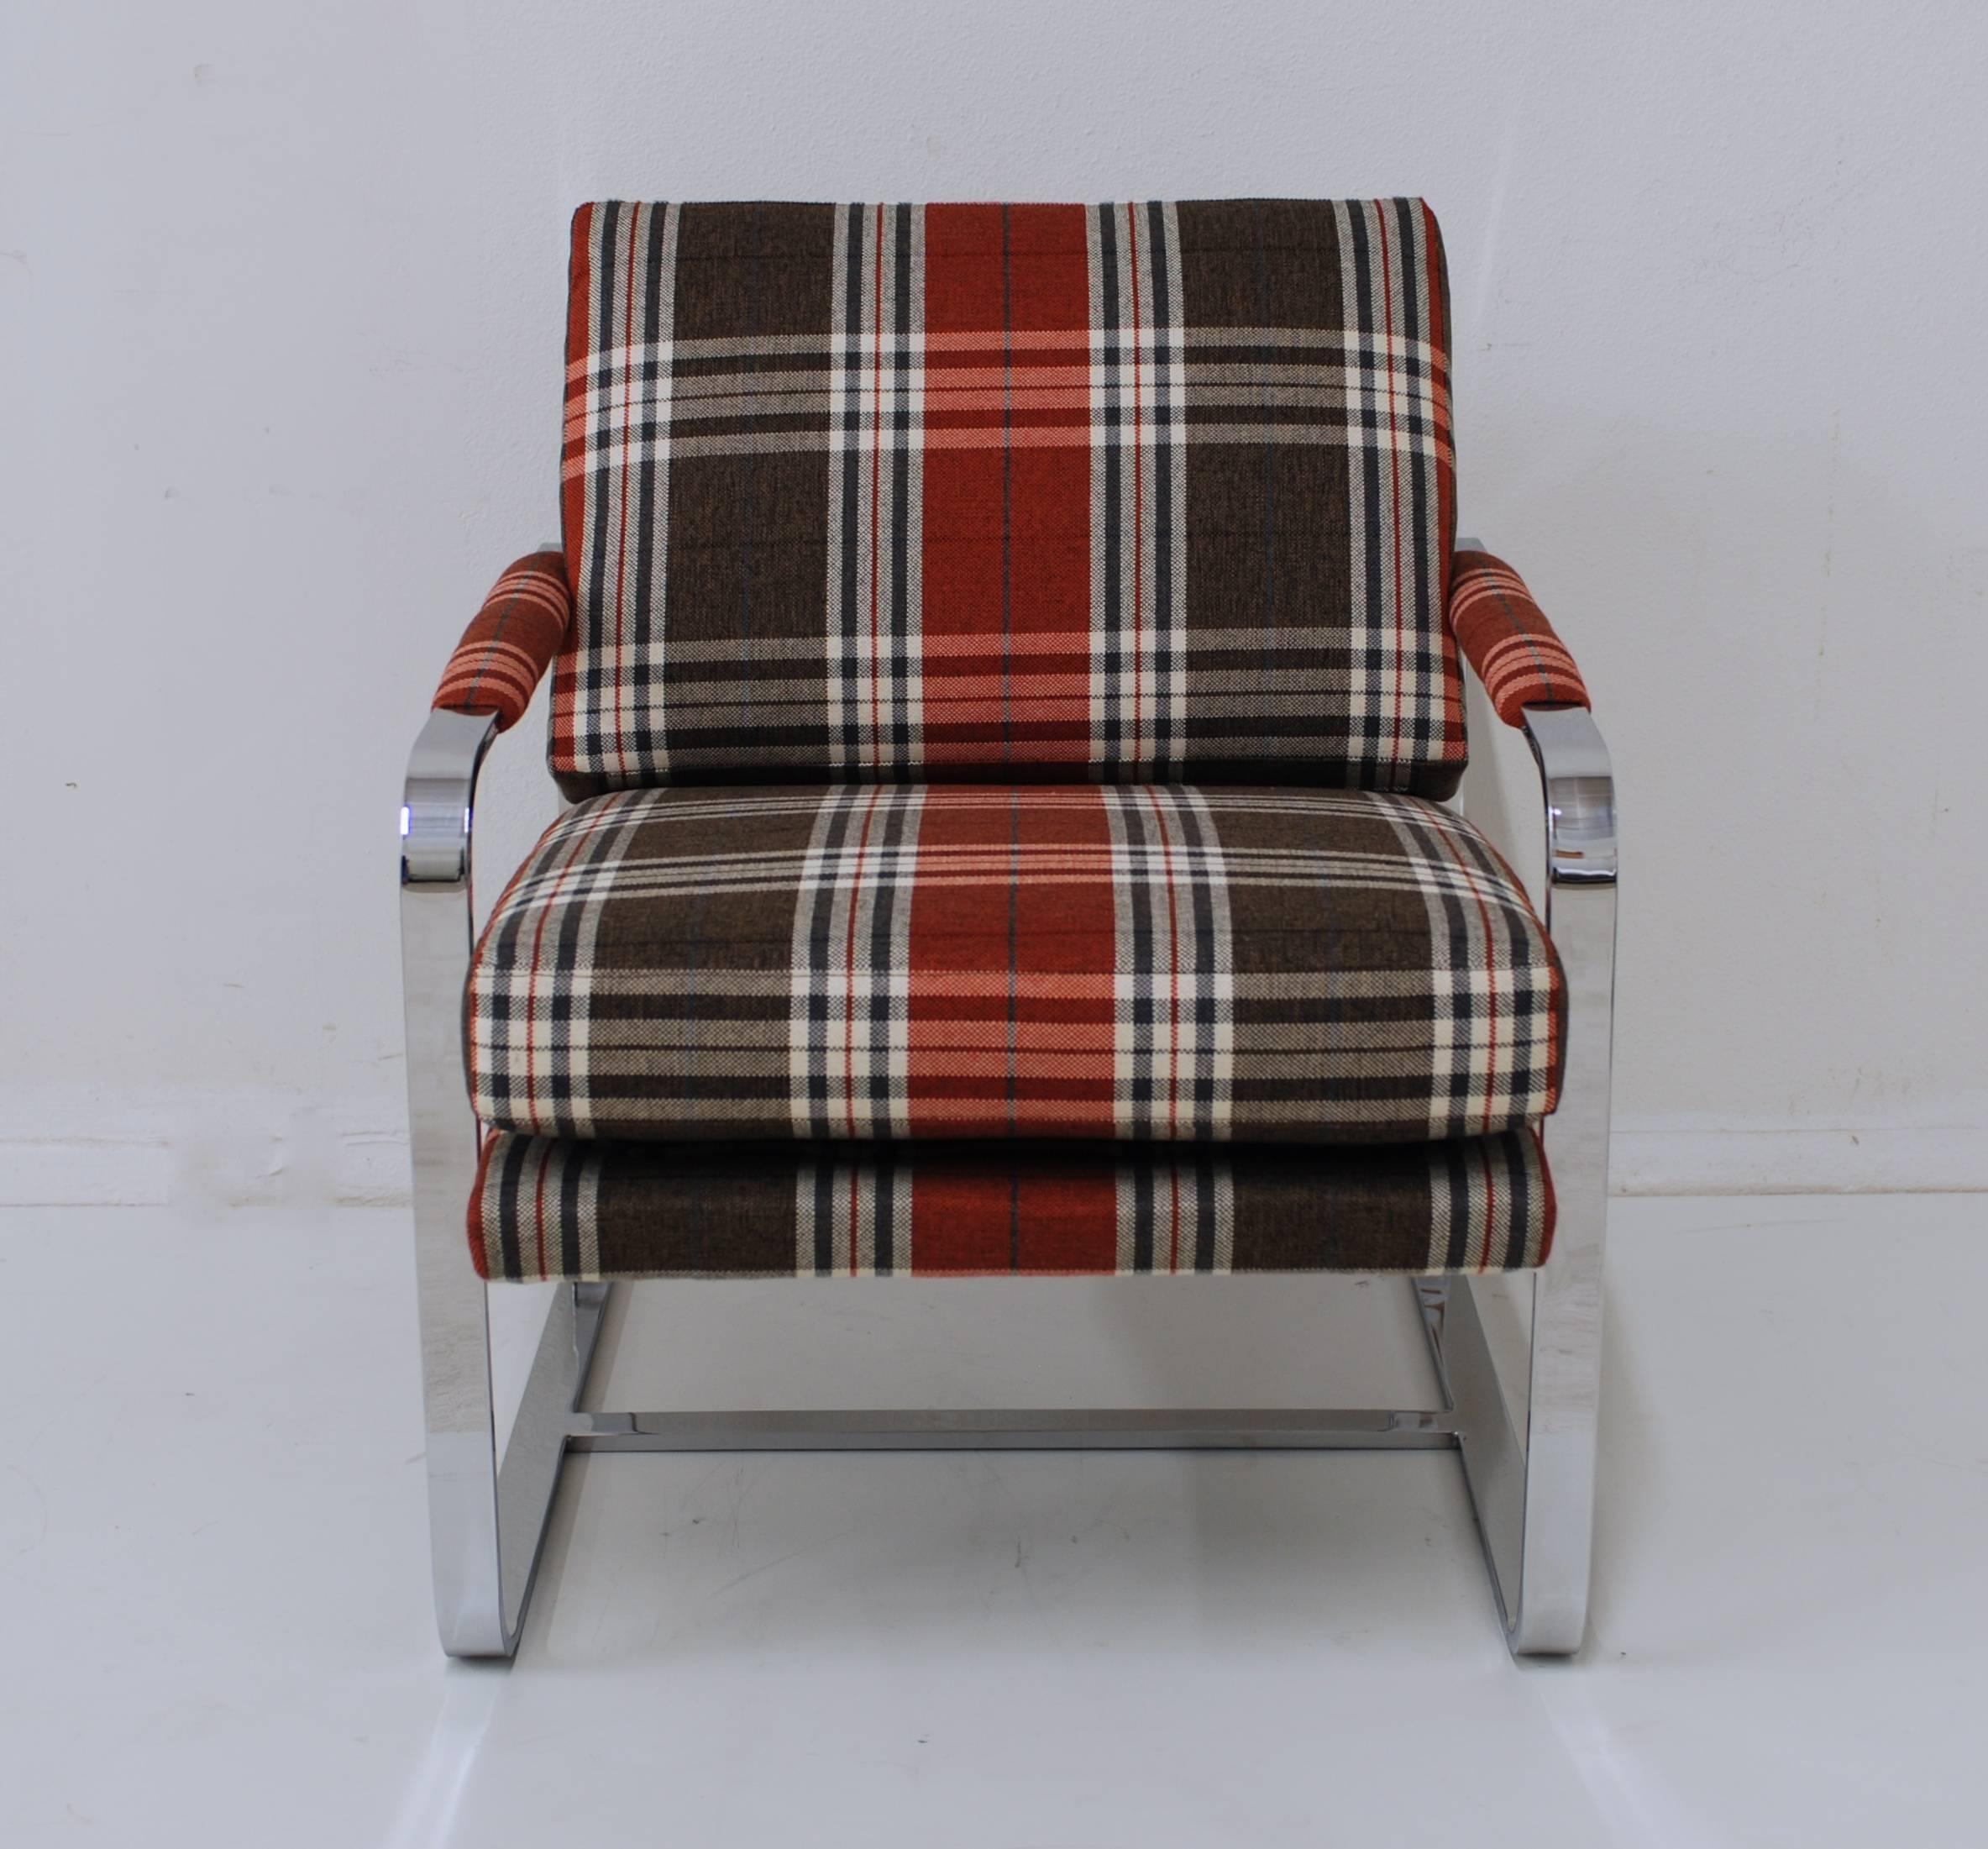 Chrome Milo Baughman Style Lounge Chair with Tartan Fabric 1